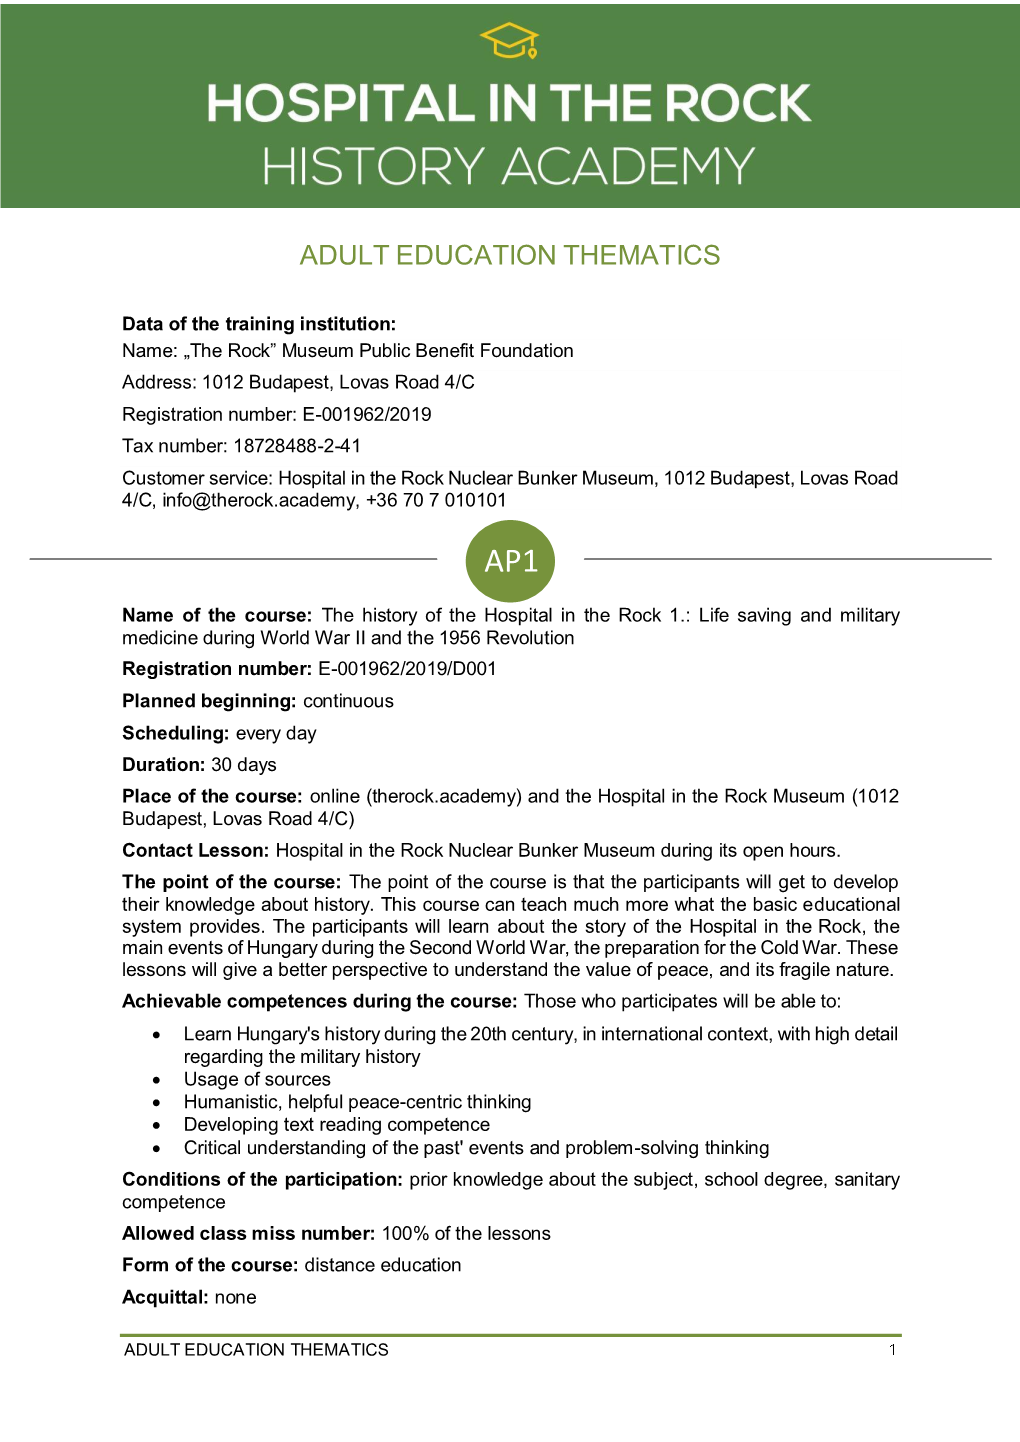 Adult Education Thematics